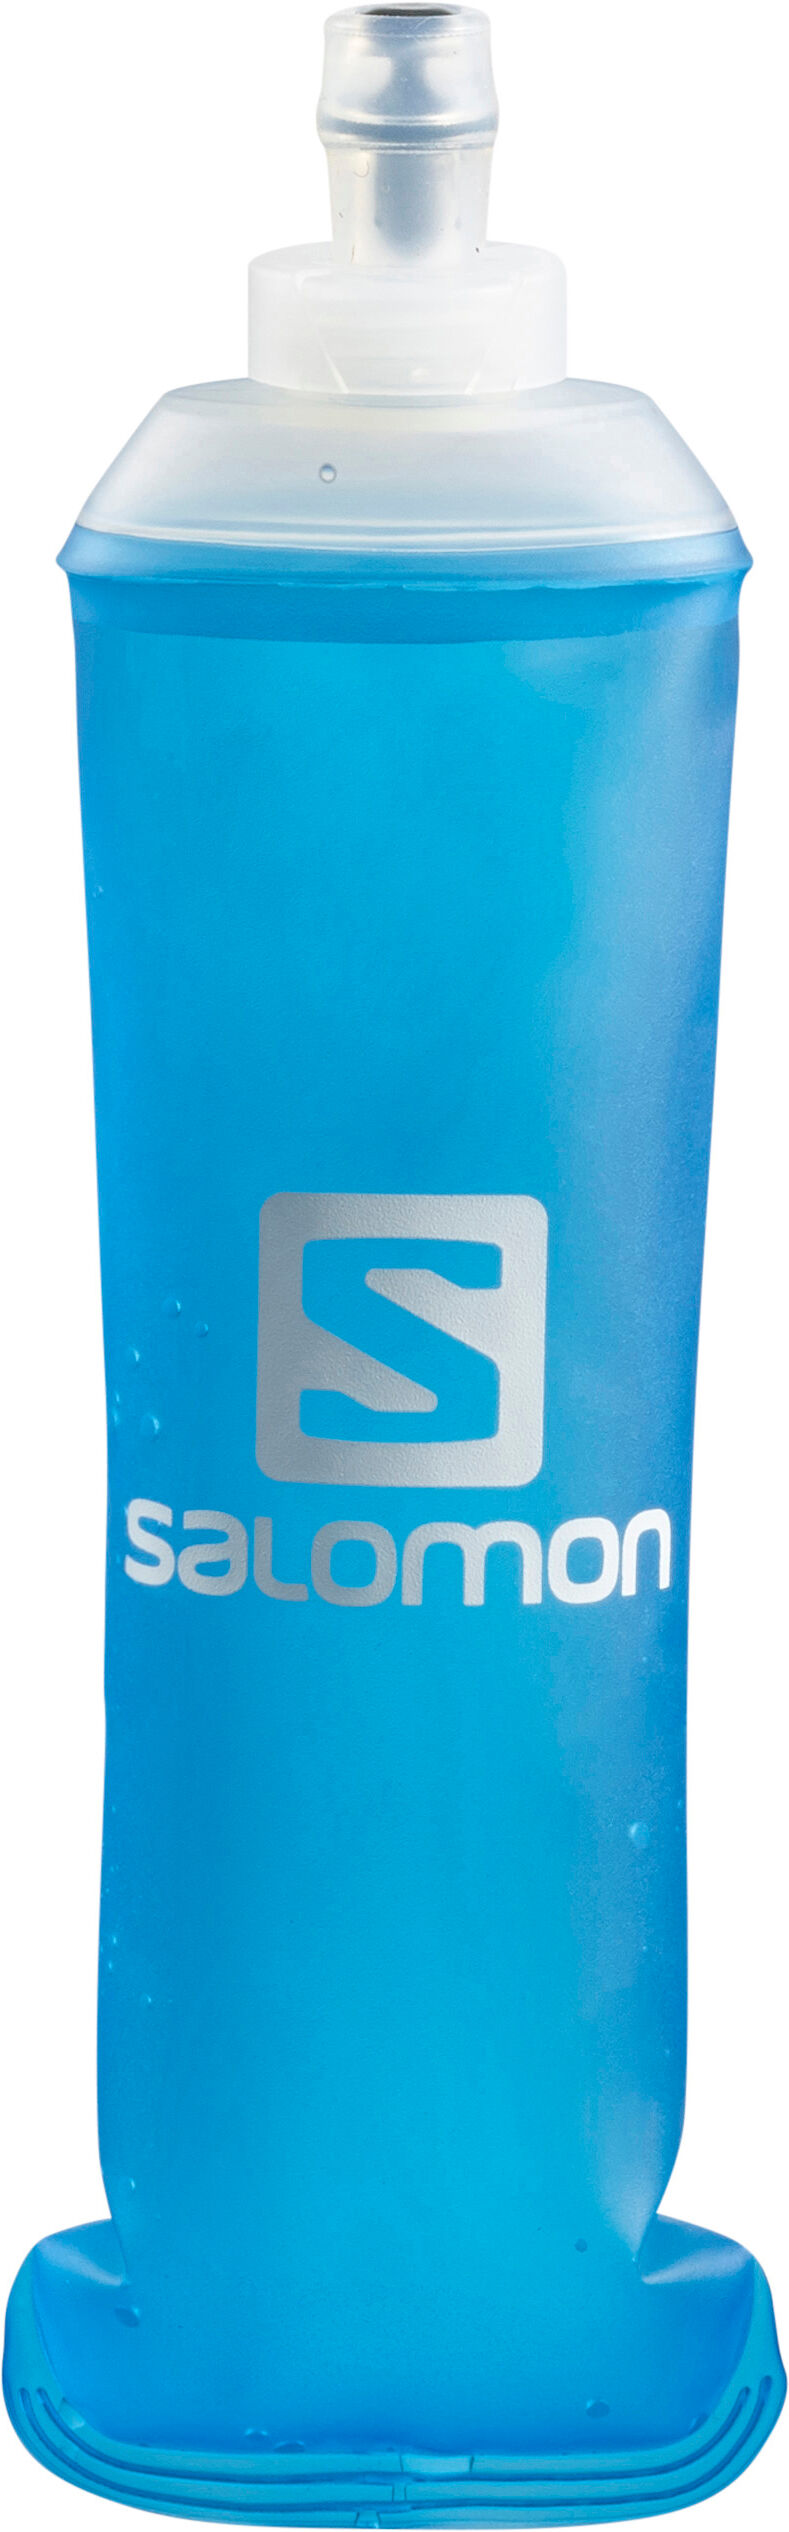 Salomon Soft Flask 500 mL - Drinkfles